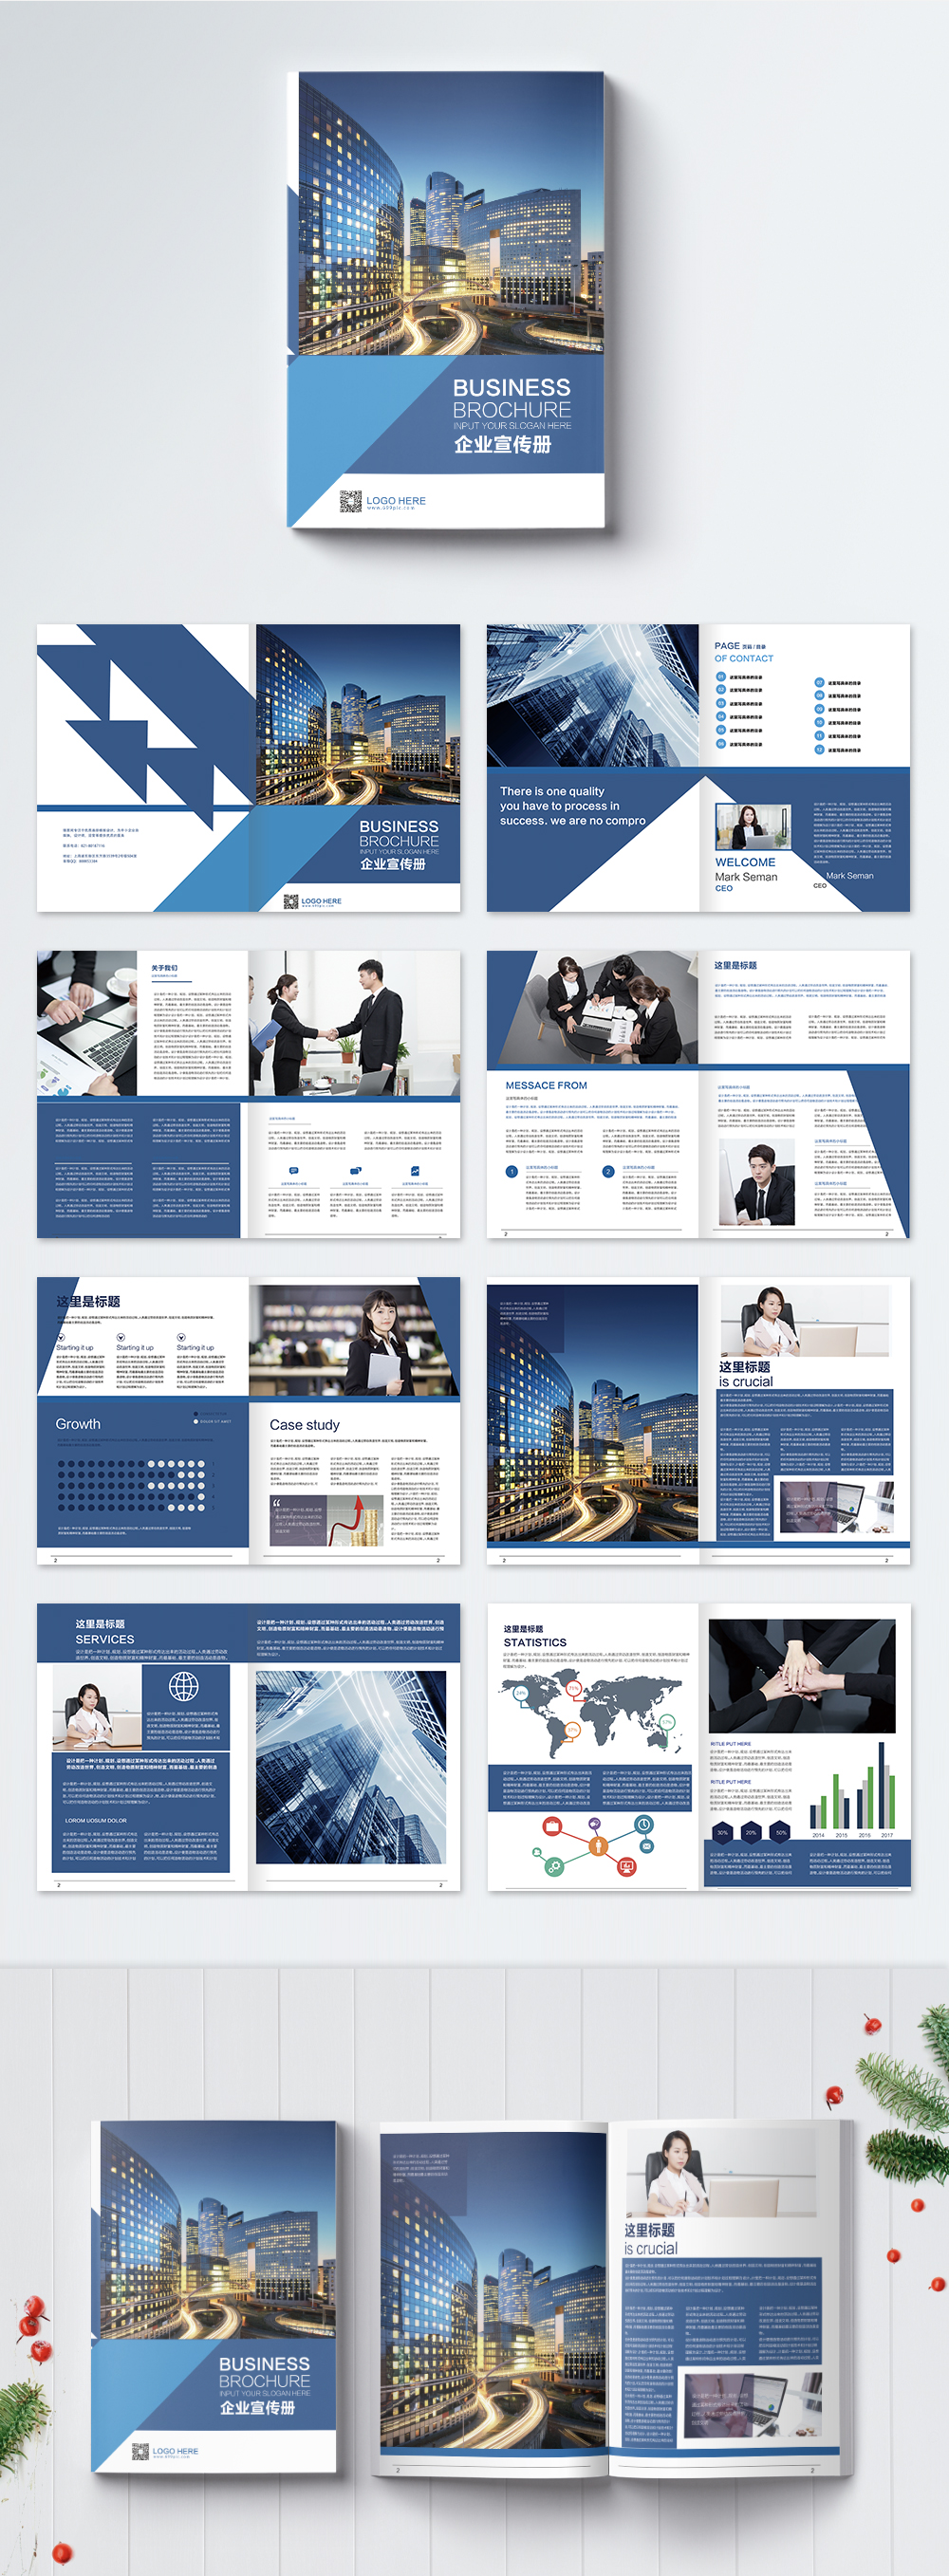 Enterprise brochure complete set template image_picture free download ...